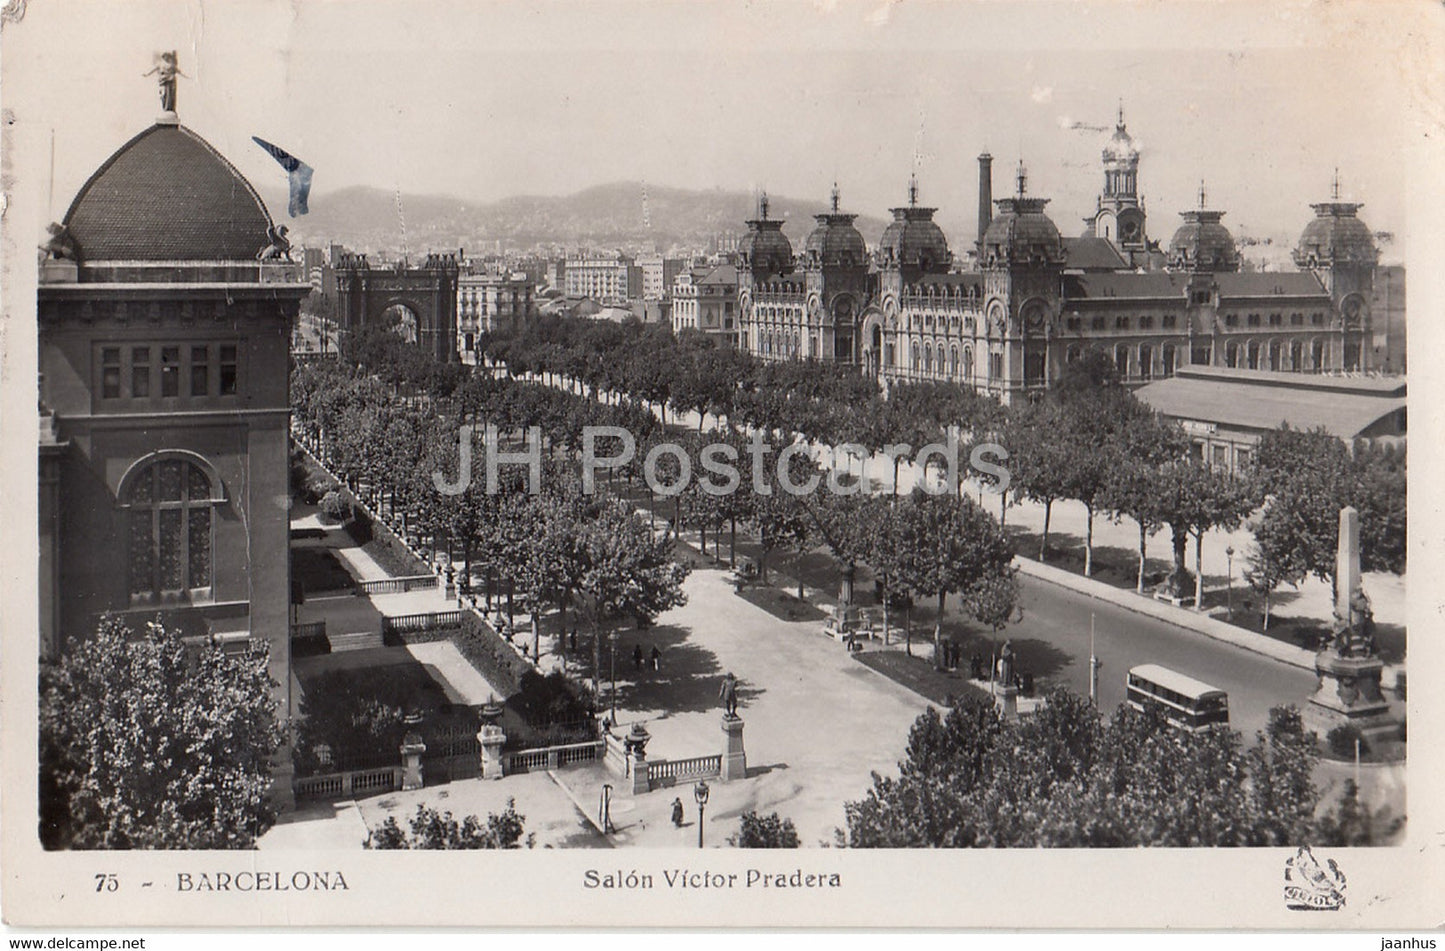 Barcelona - Salon Victor Pradera - 75 - old postcard - 1946 - Spain - used - JH Postcards